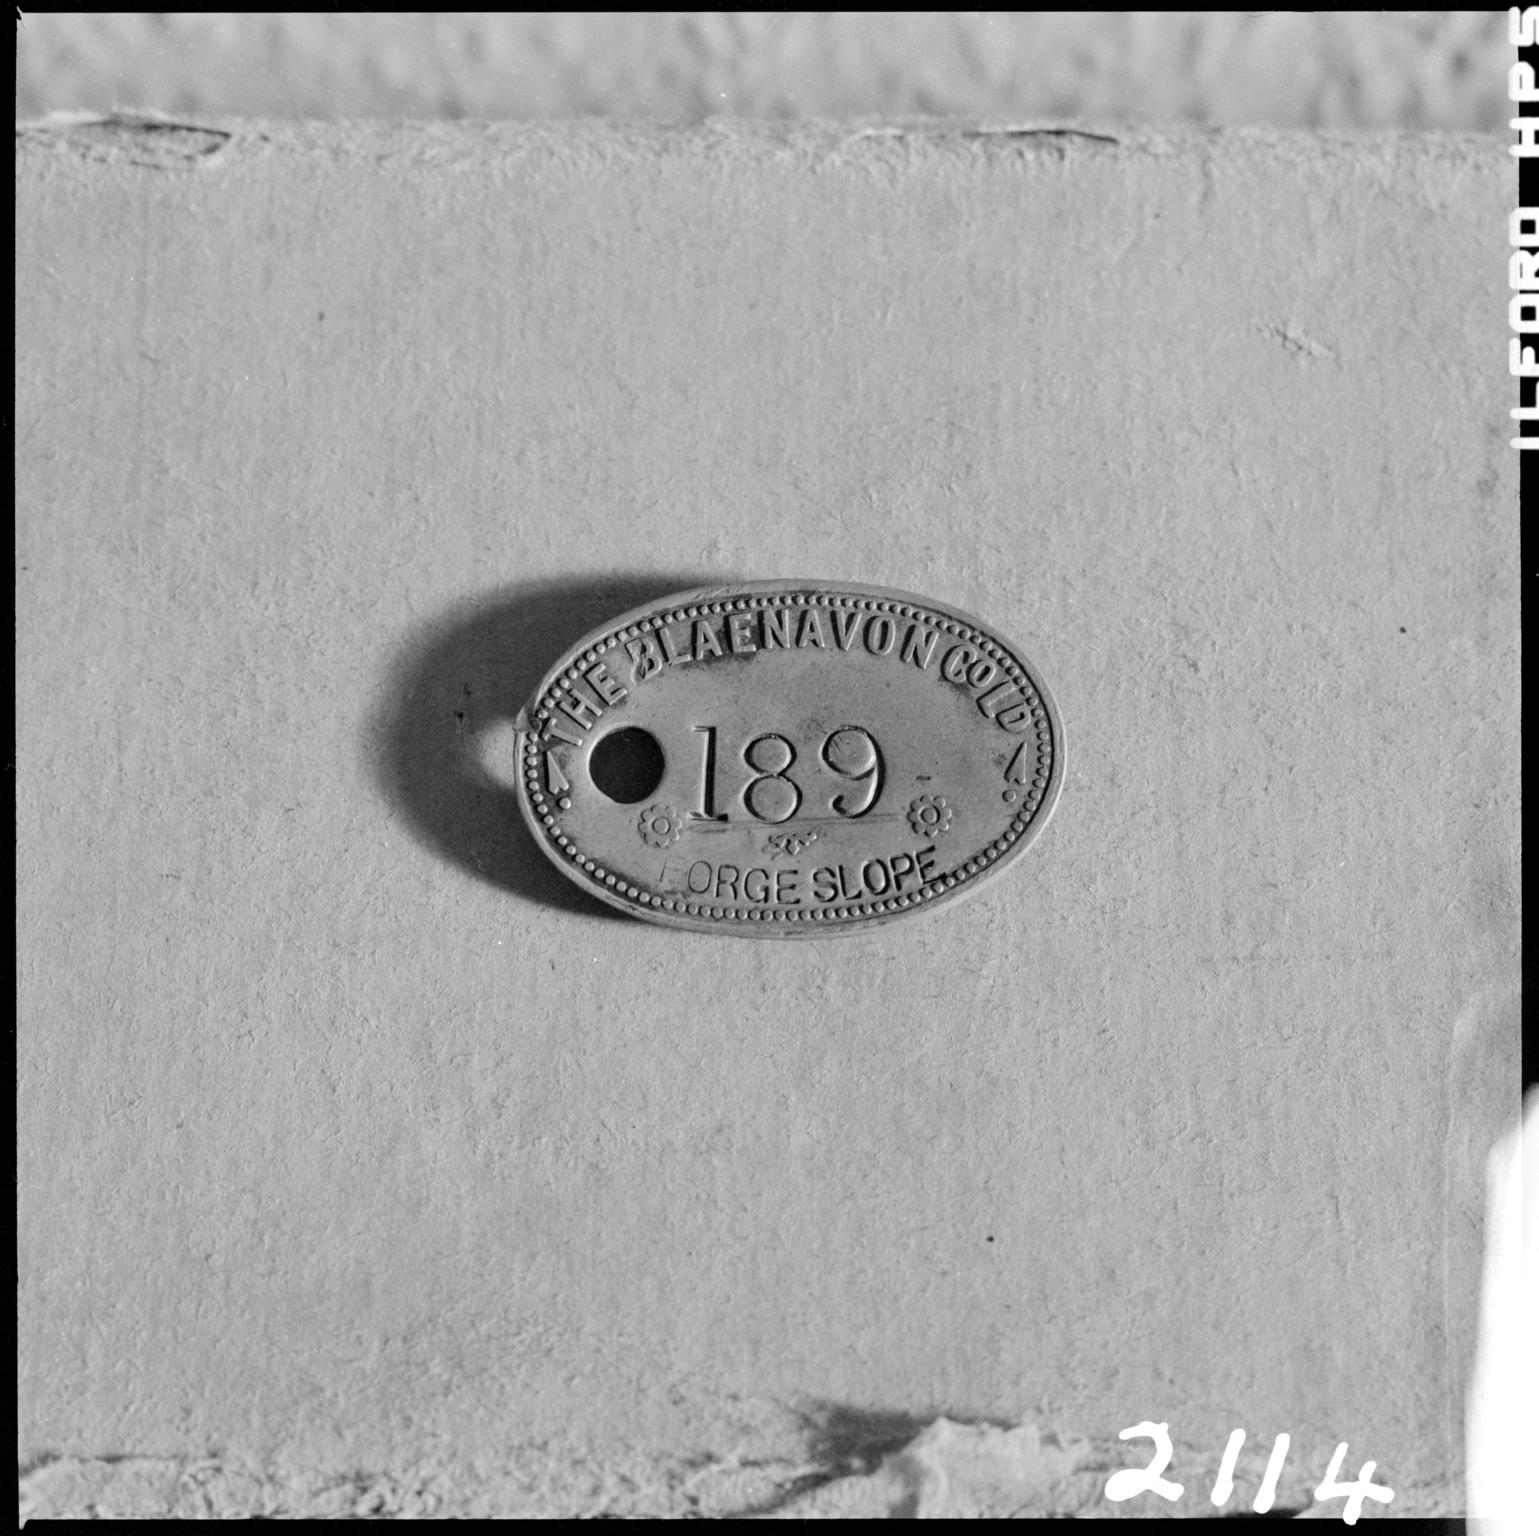 Blaenavon Co Ltd. lamp check, film negative